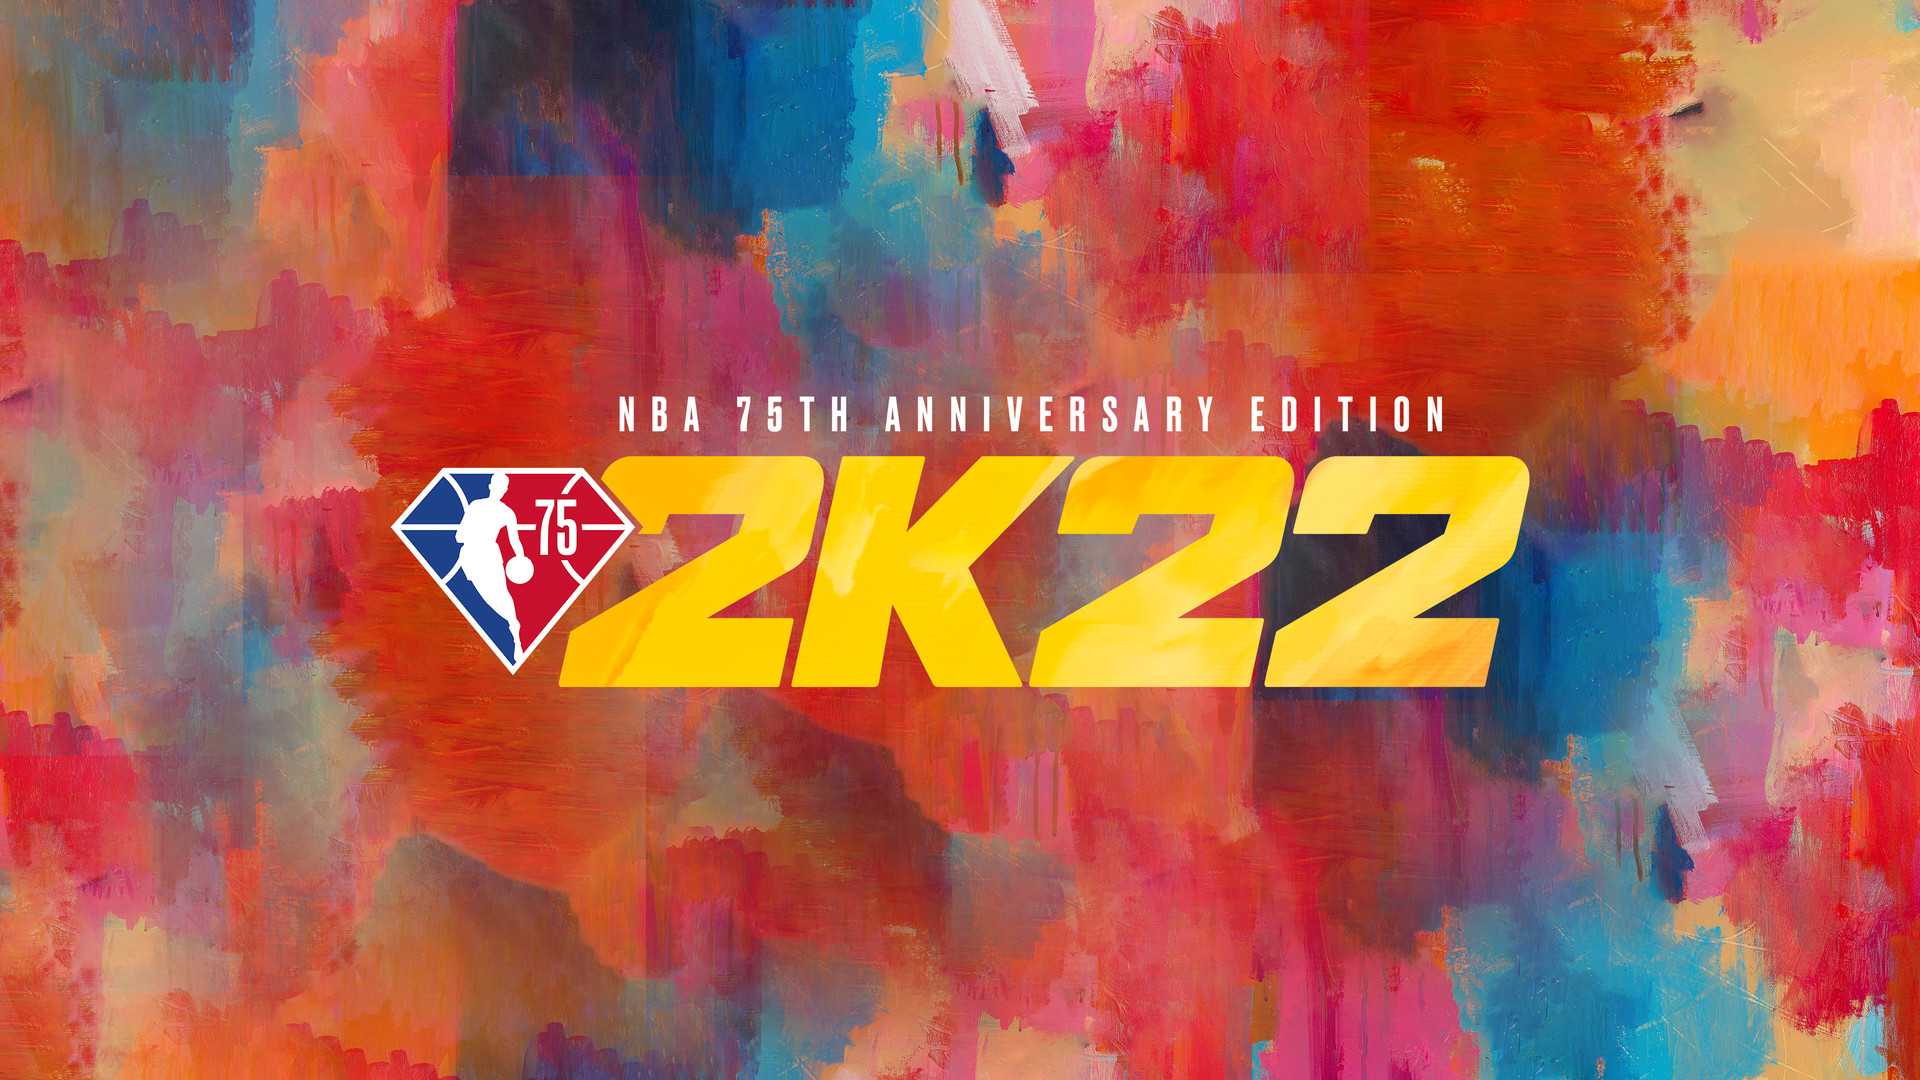 NBA 2K22 Cross-Gen Digital Bundle EU XBOX One / Xbox Series X,S CD Key